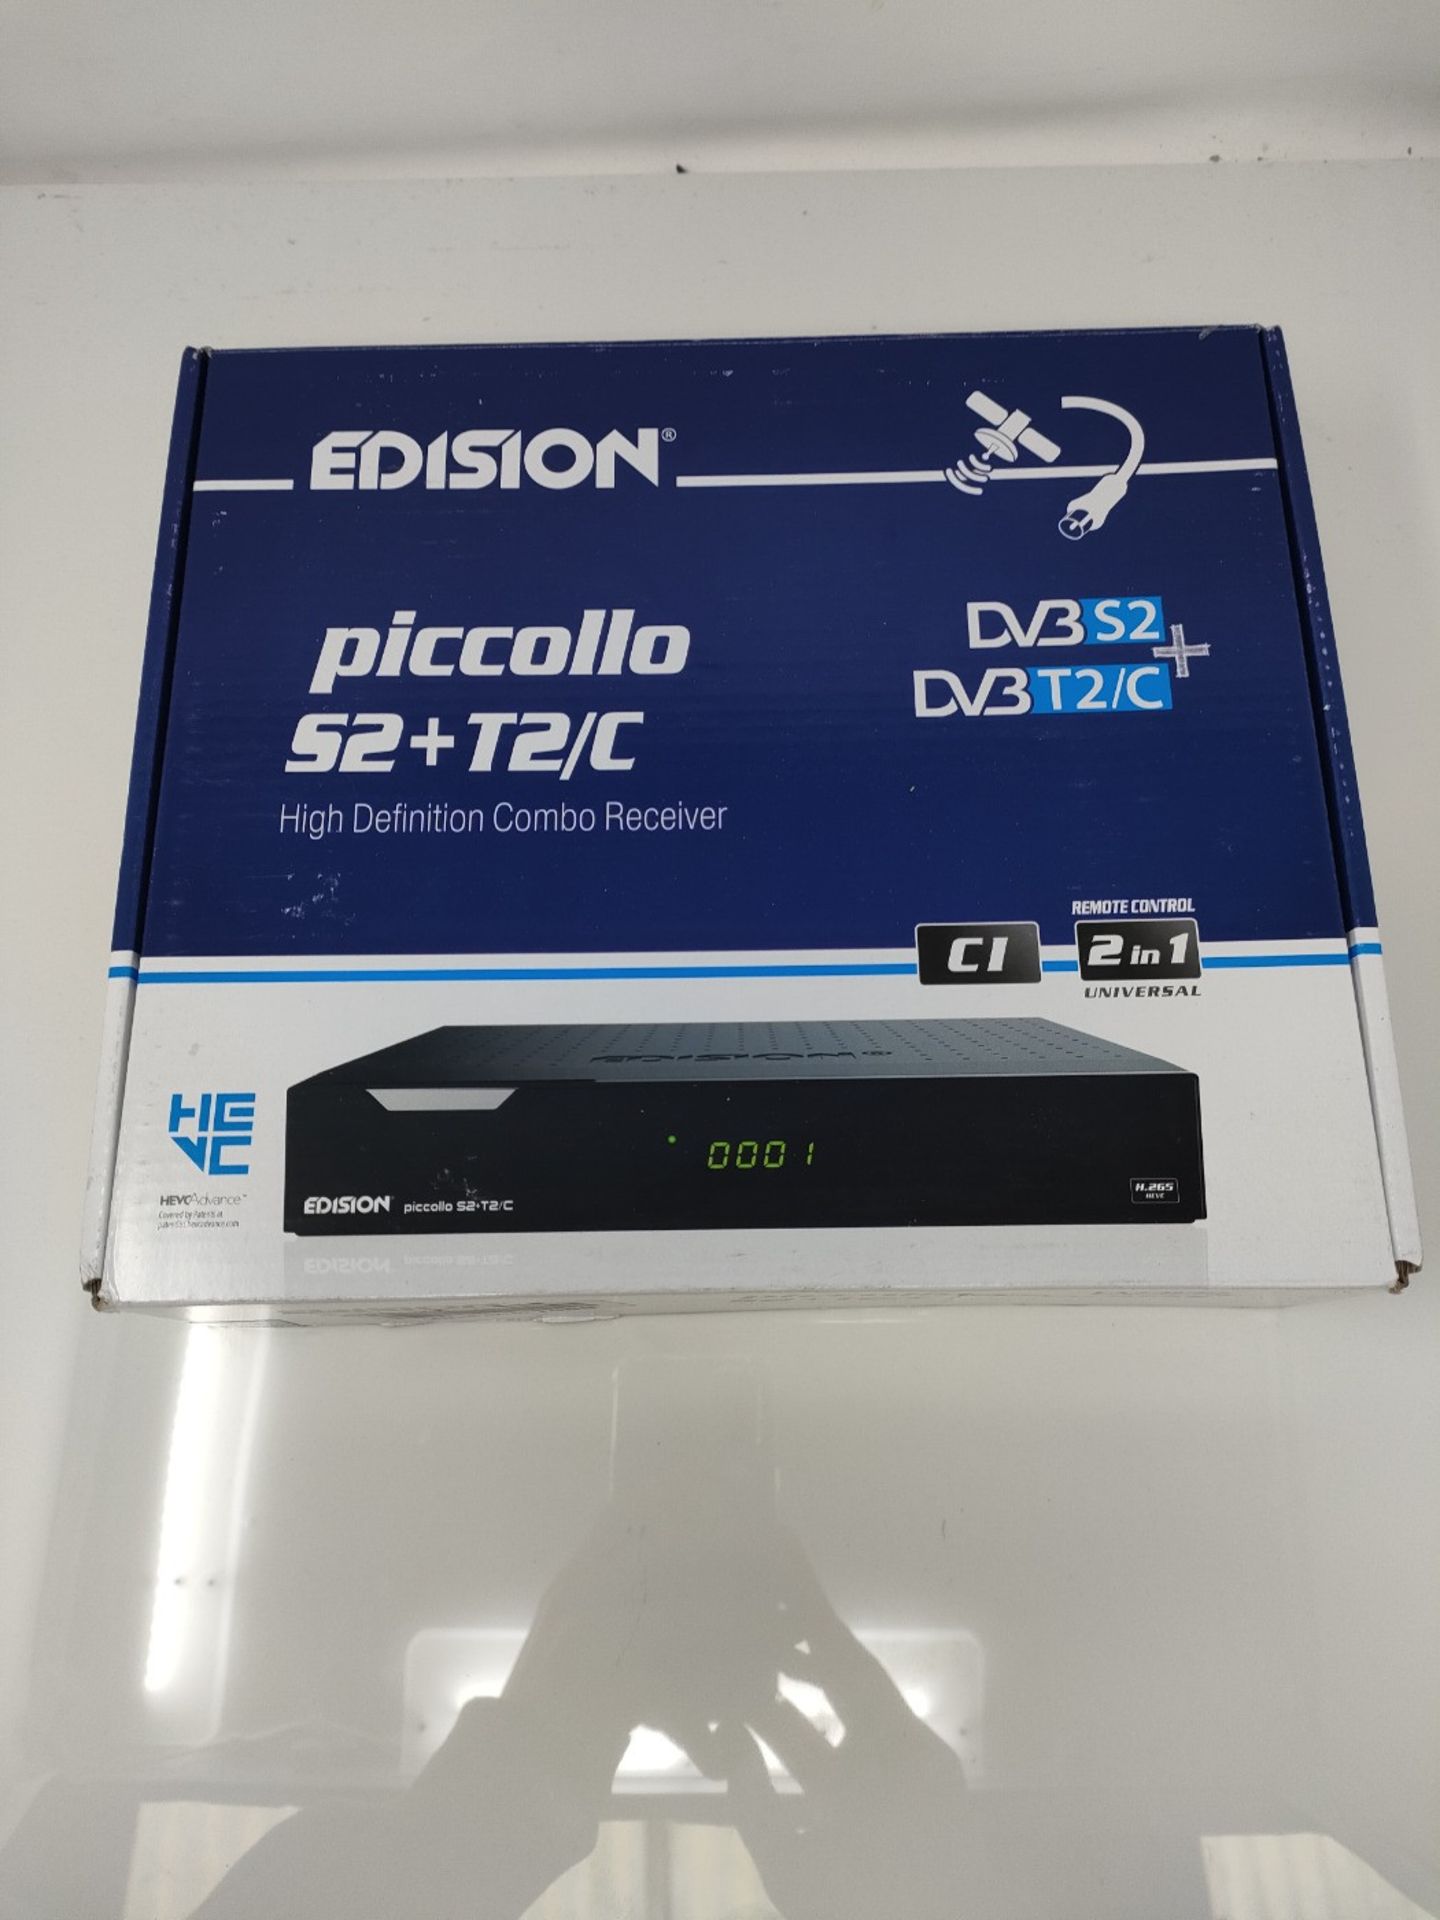 RRP £59.00 EDISION PICCOLLO S2+T2/C, Combo Receiver DVB-S2/T2/C H265 HEVC, C.I, Full HD, USB, 2in - Image 2 of 3